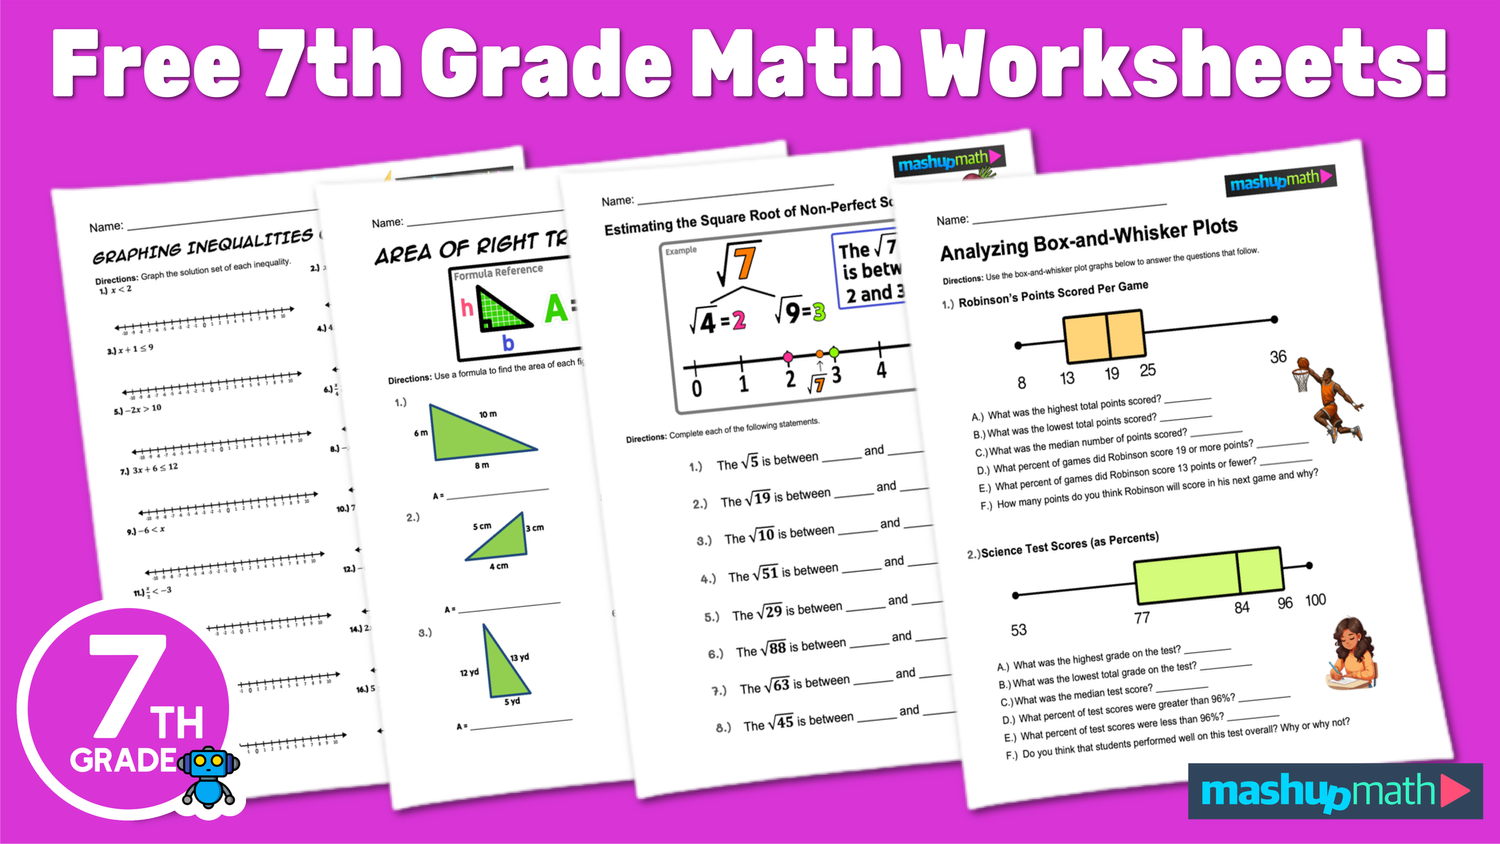 Drawing Speed-Time Graphs Worksheet  Fun and Engaging 8th Grade PDF  Worksheets